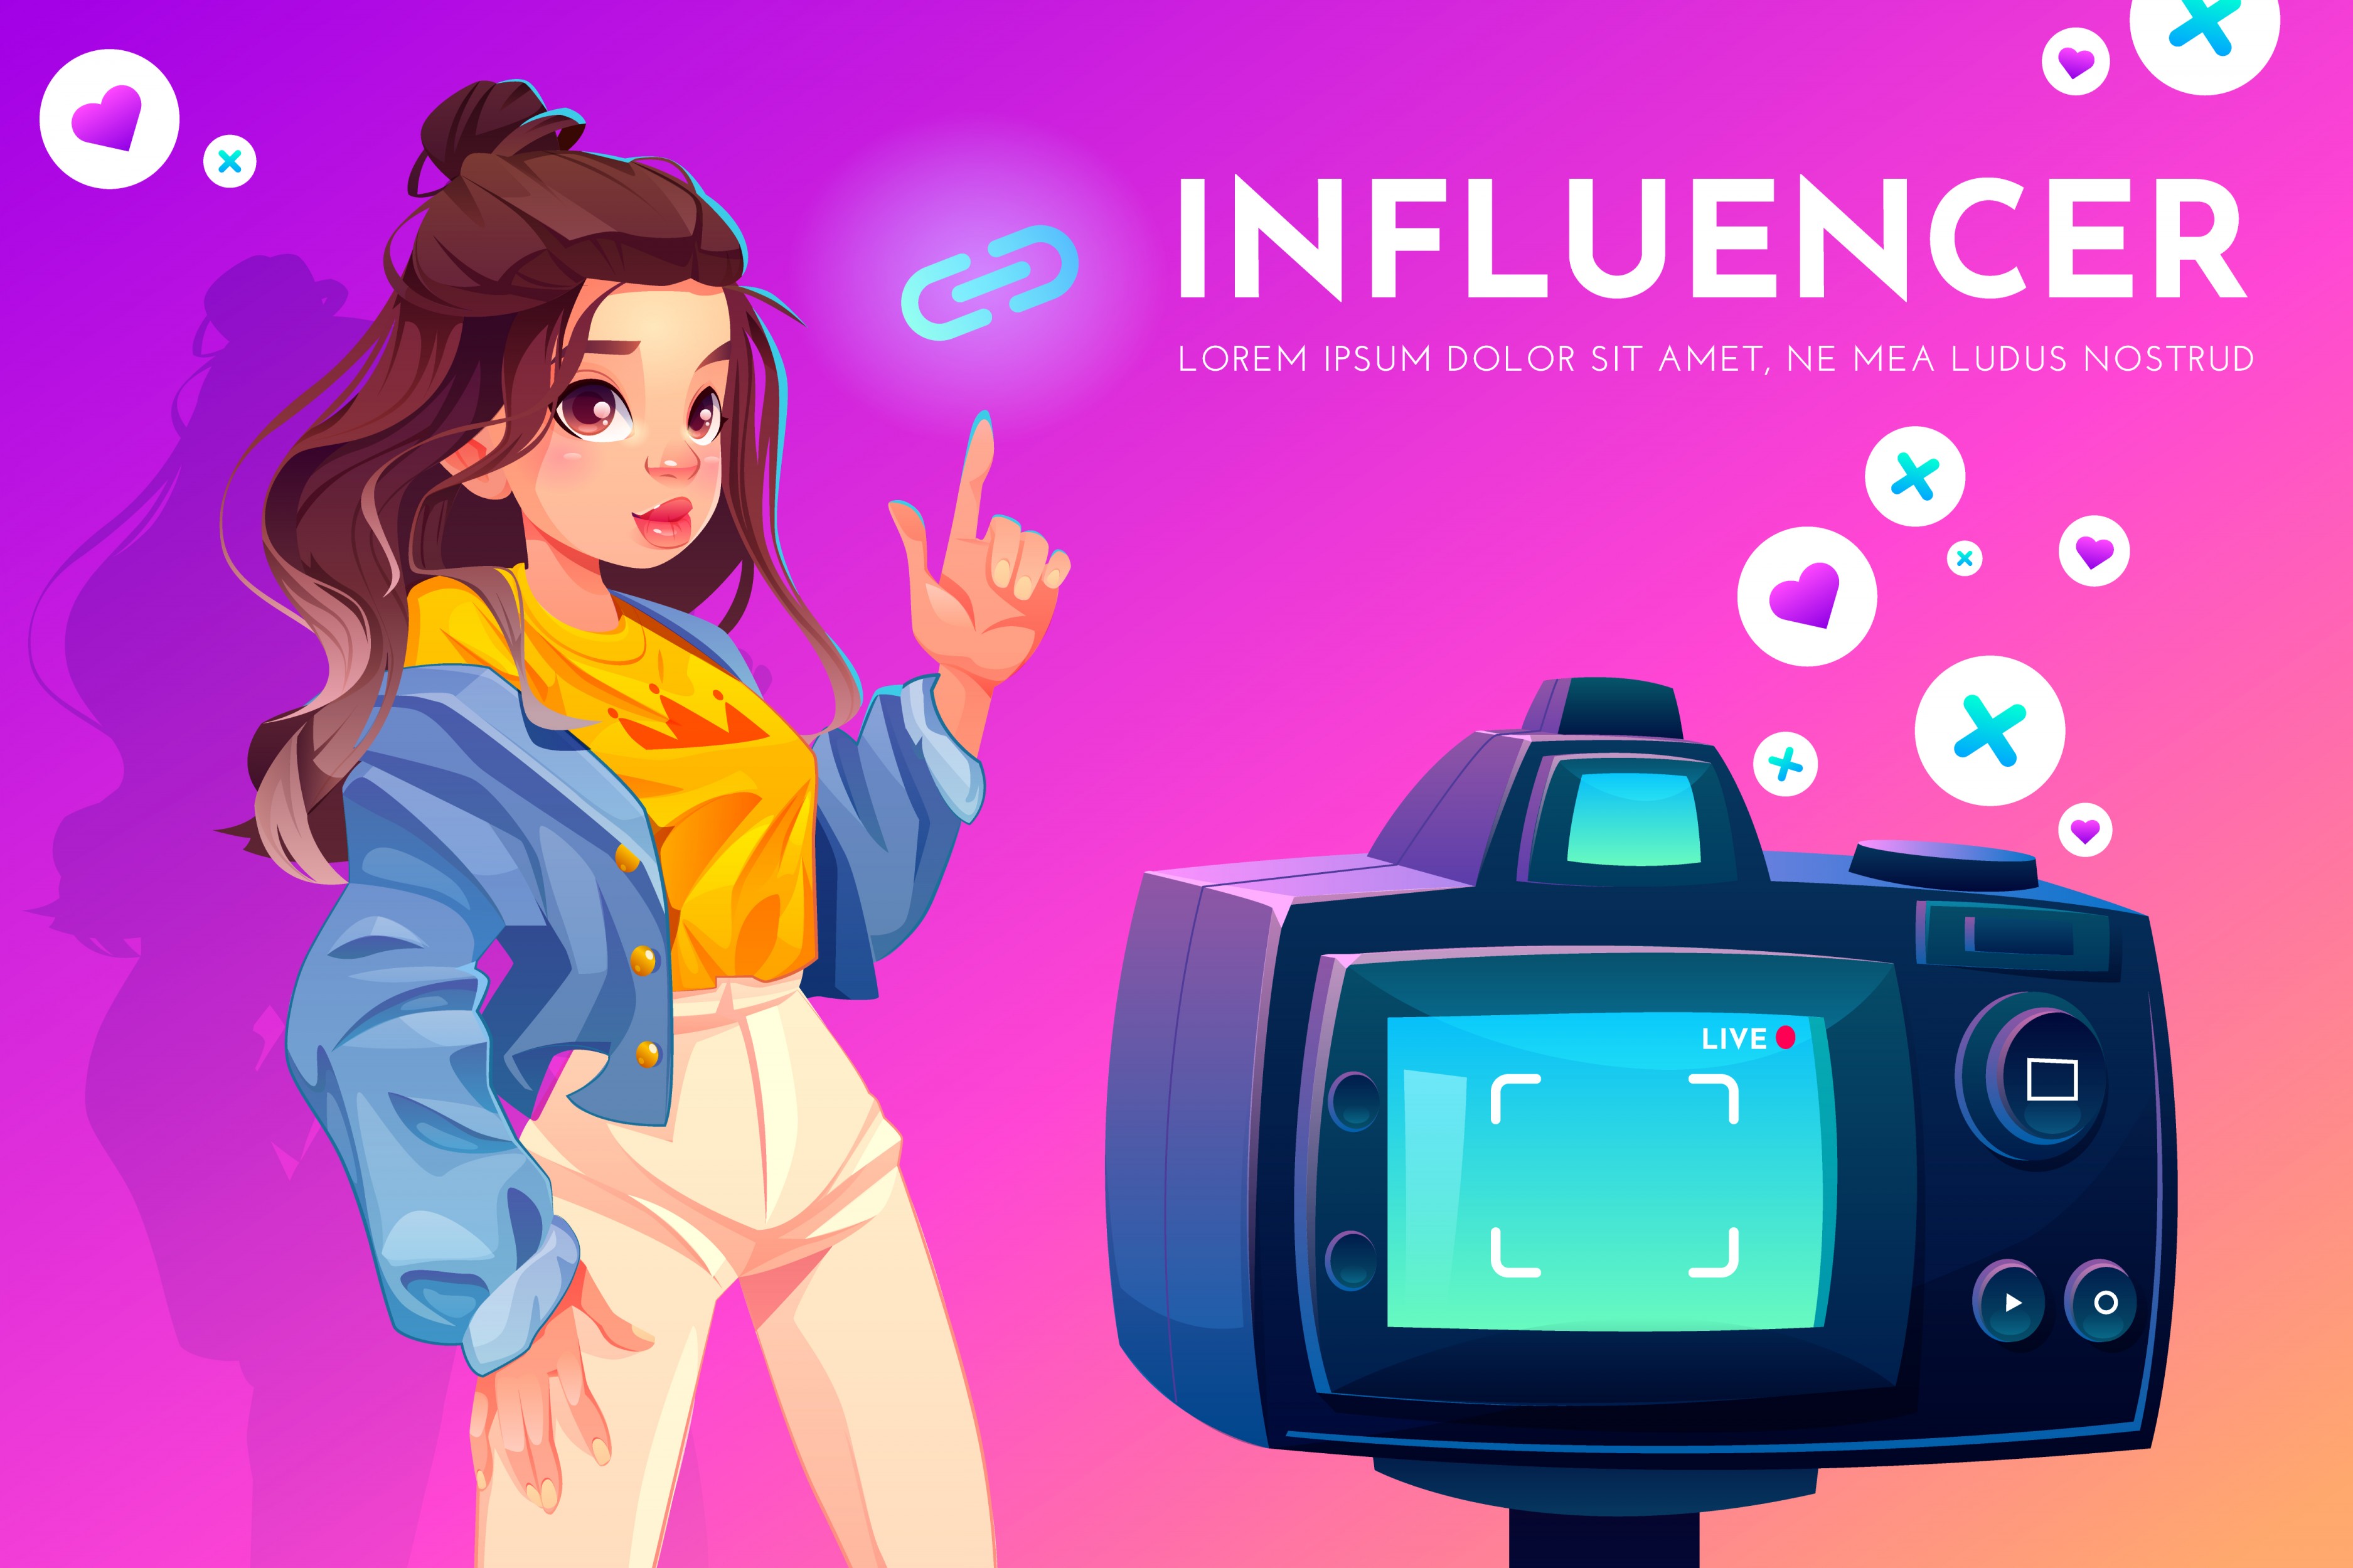 influencer_marketing